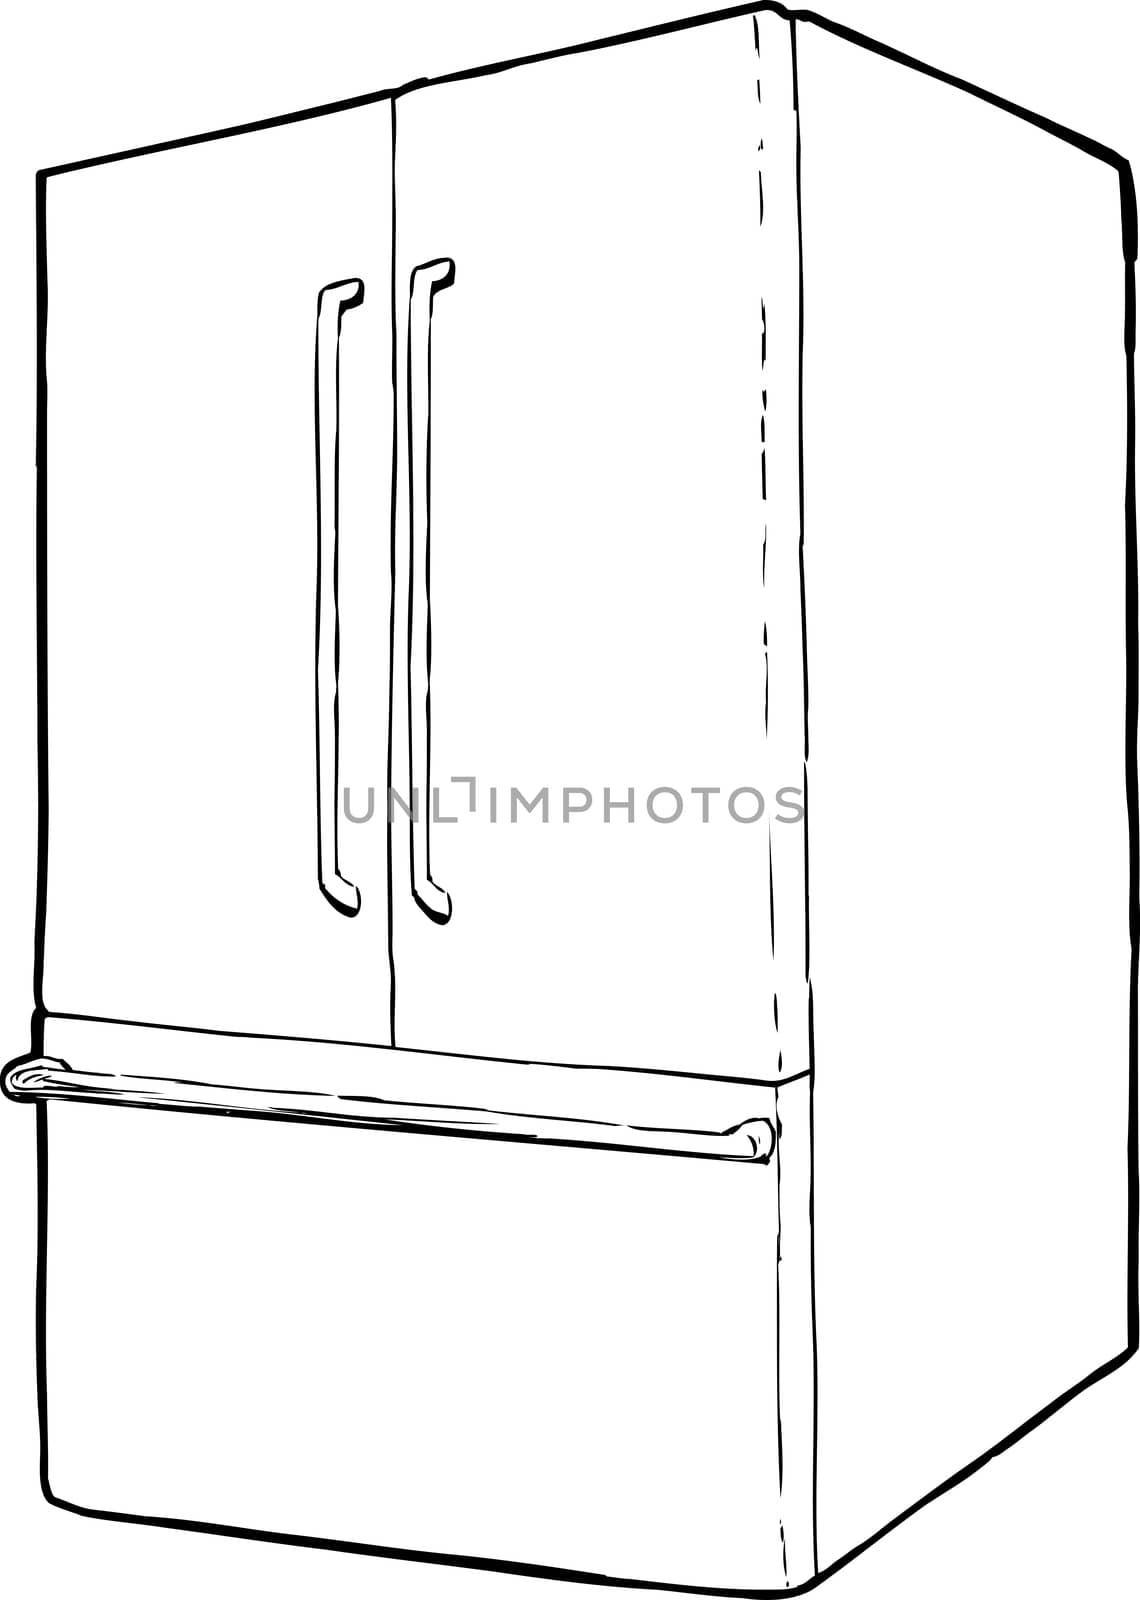 Single isolated refrigerator by TheBlackRhino